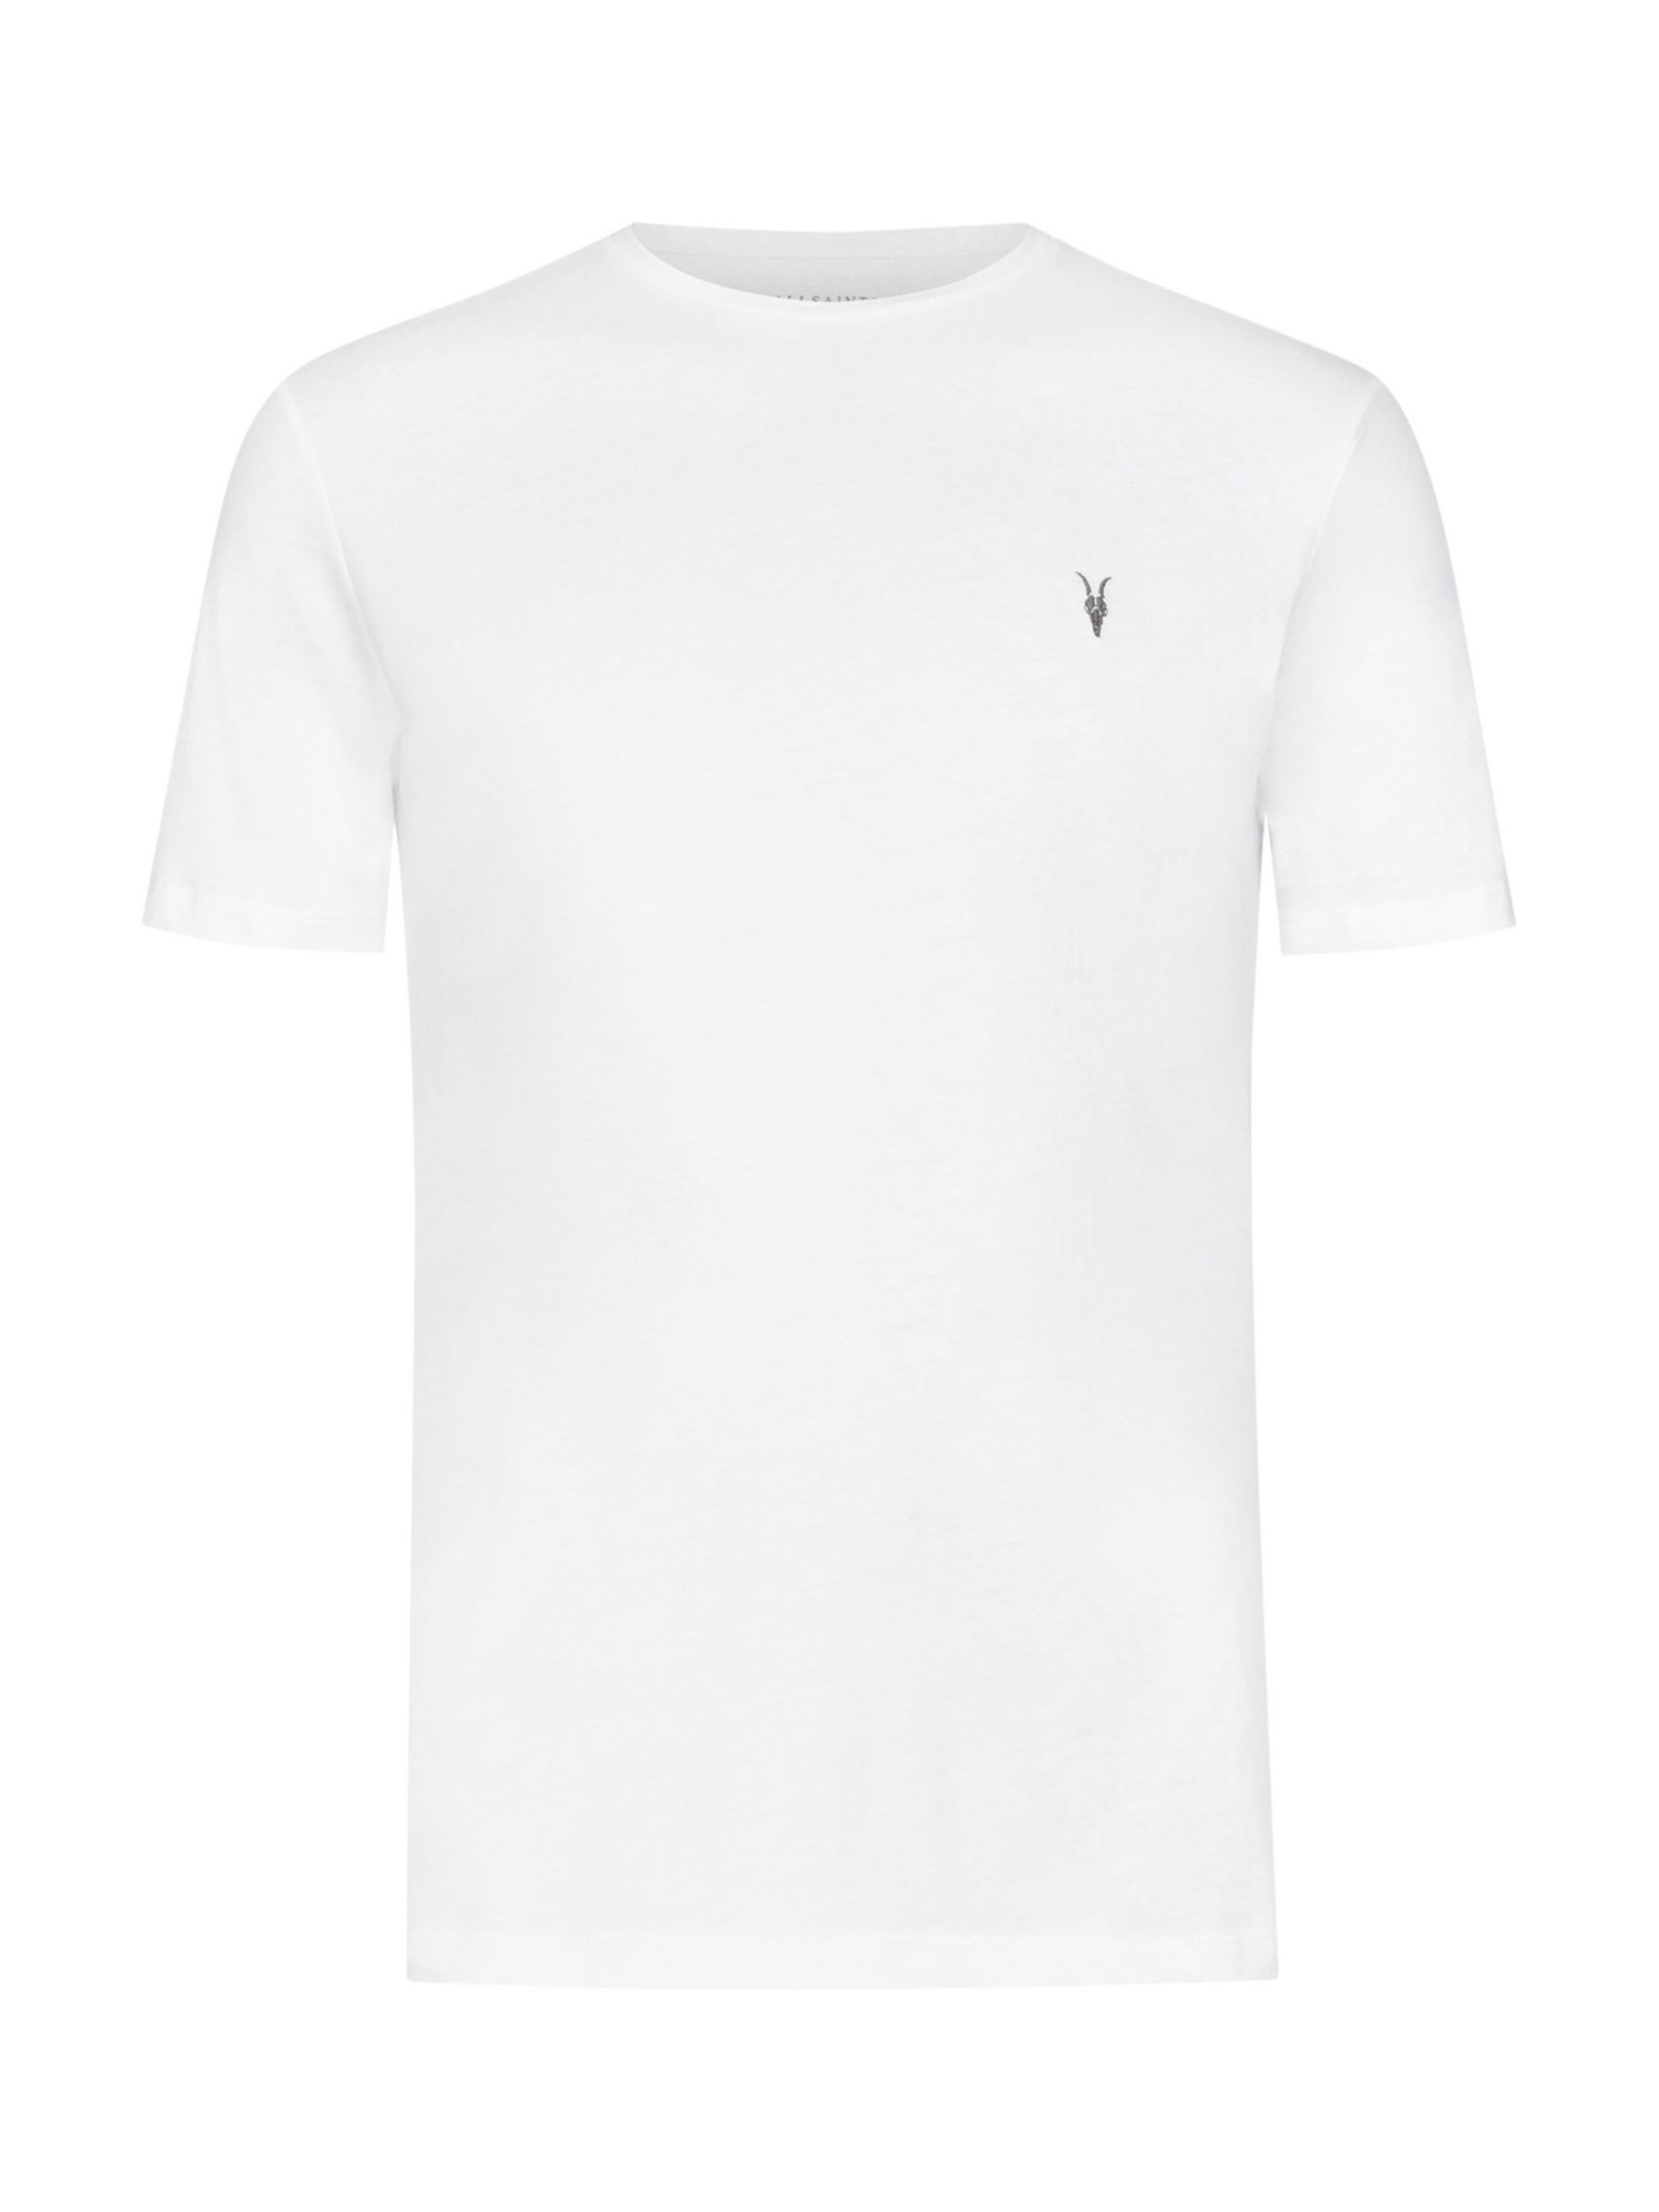 AllSaints Brace Tonic Crew Neck T-Shirt, Optic White, XS